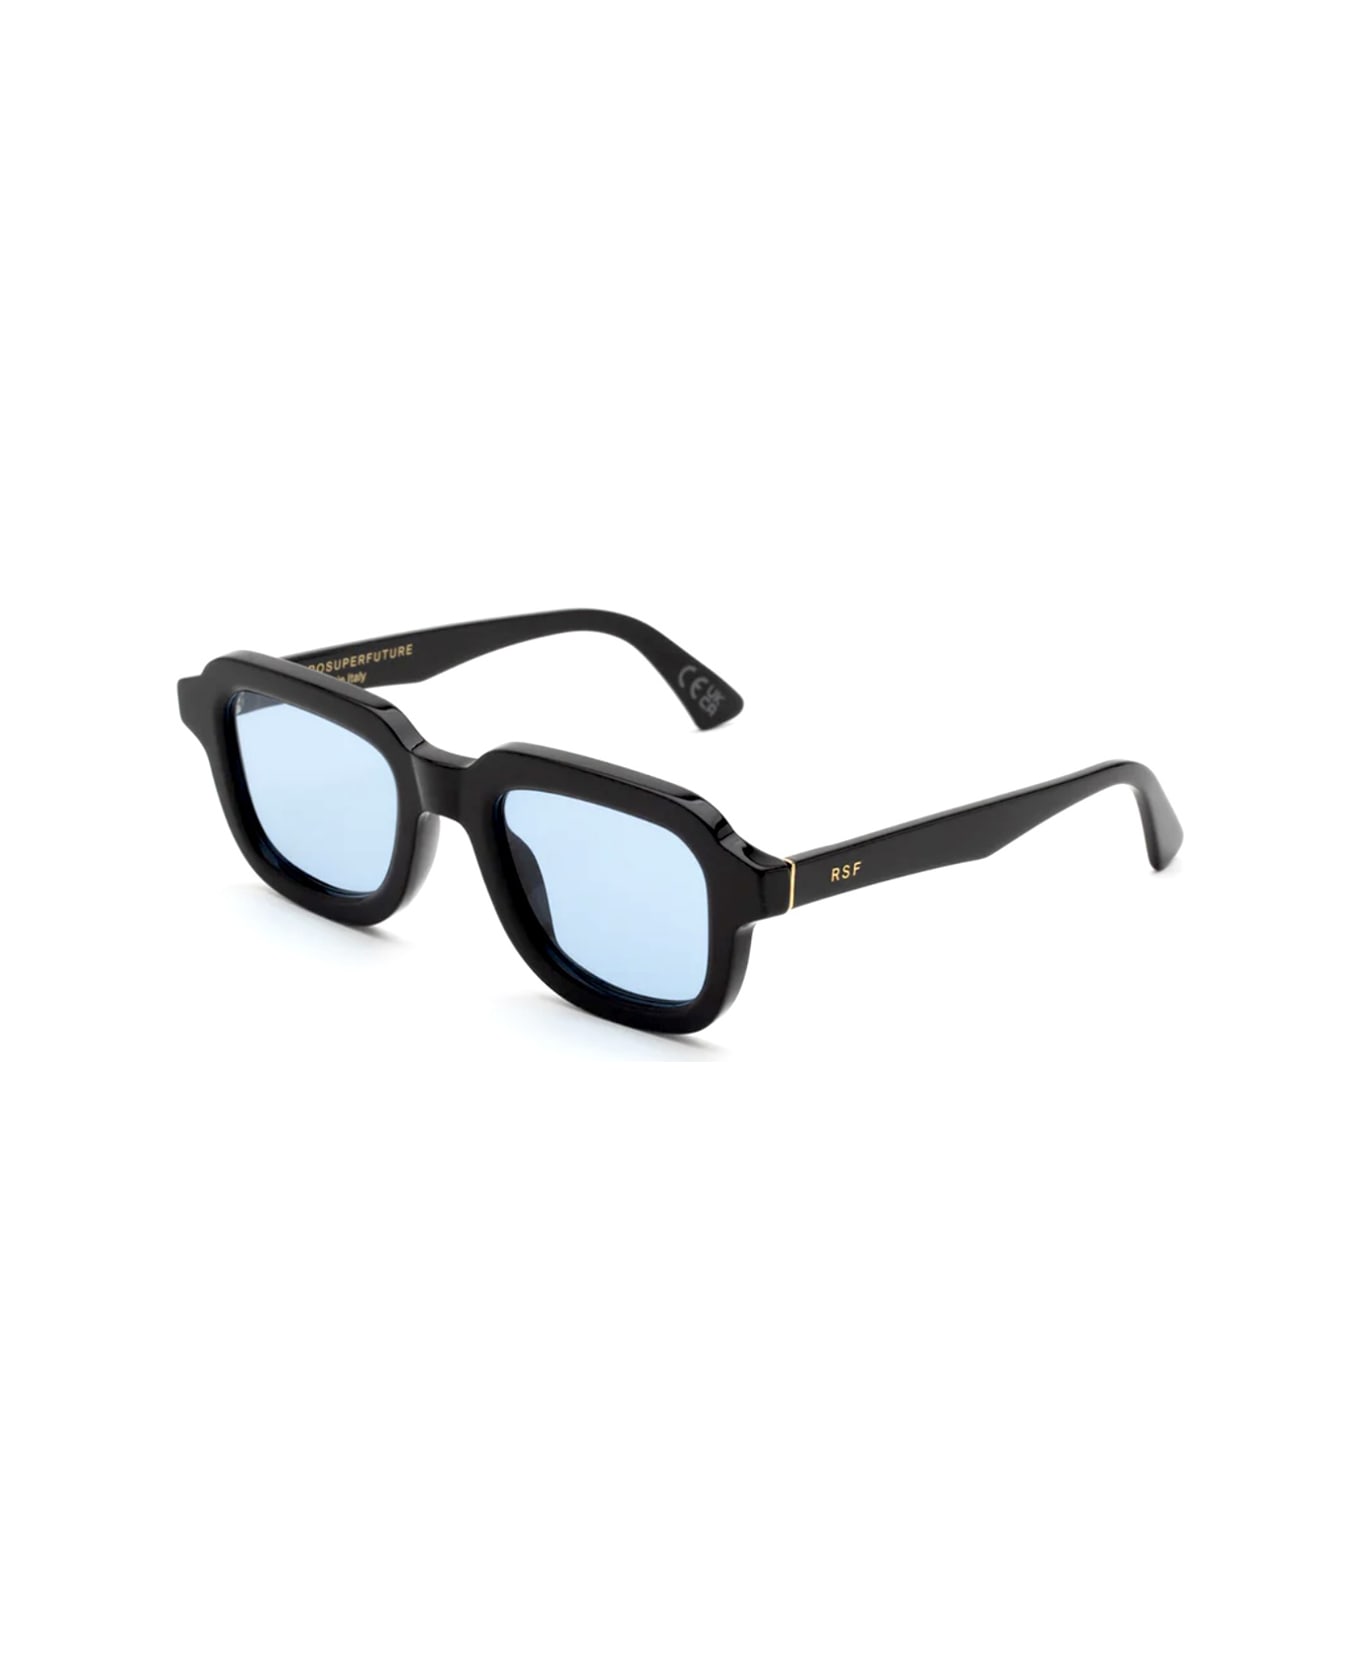 RETROSUPERFUTURE Lazarus Azure Sunglasses - Nero サングラス